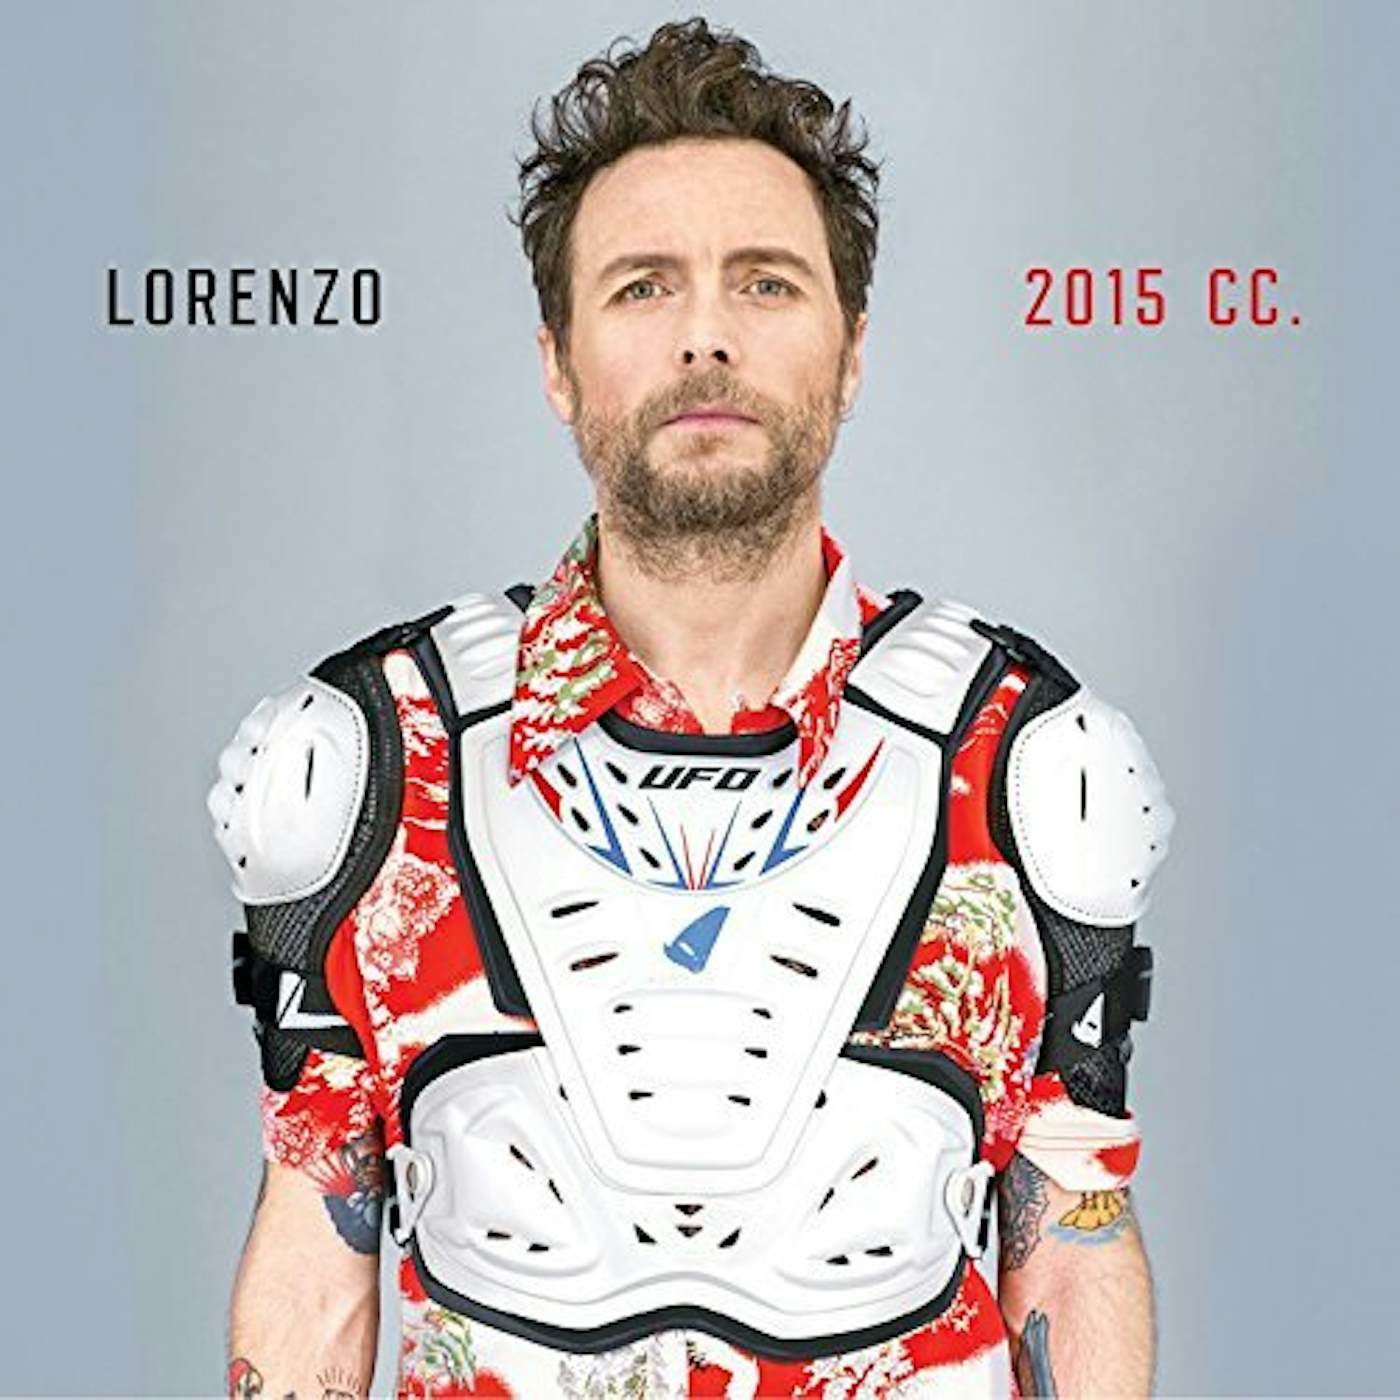 Jovanotti Lorenzo 2015 CC. Vinyl Record